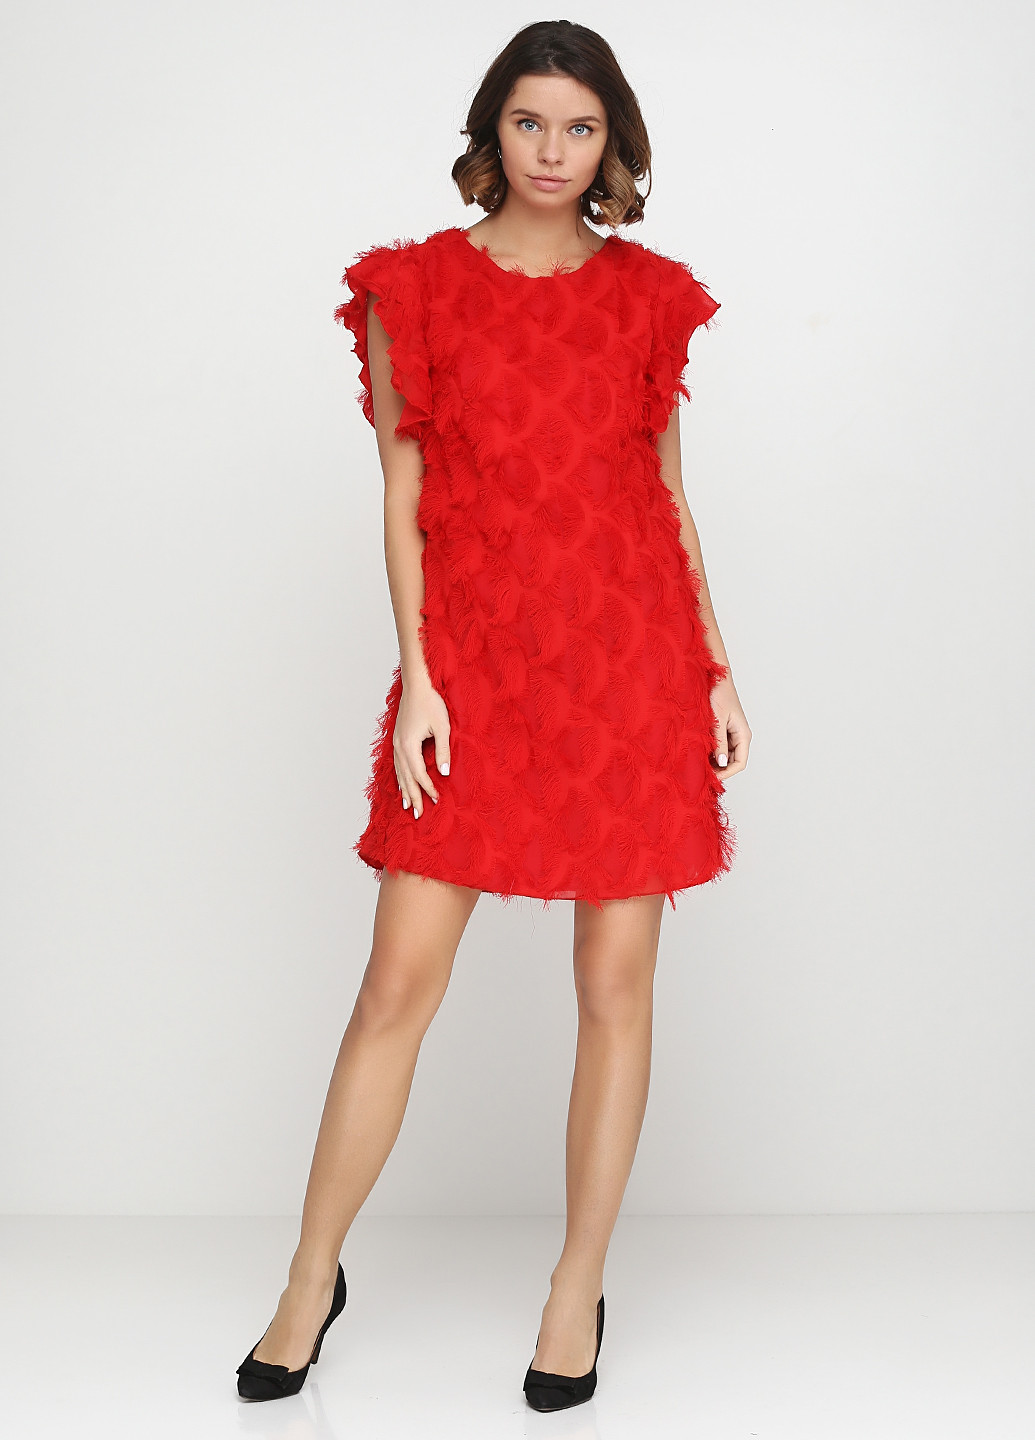 Красное коктейльное платье Sonetti фактурное